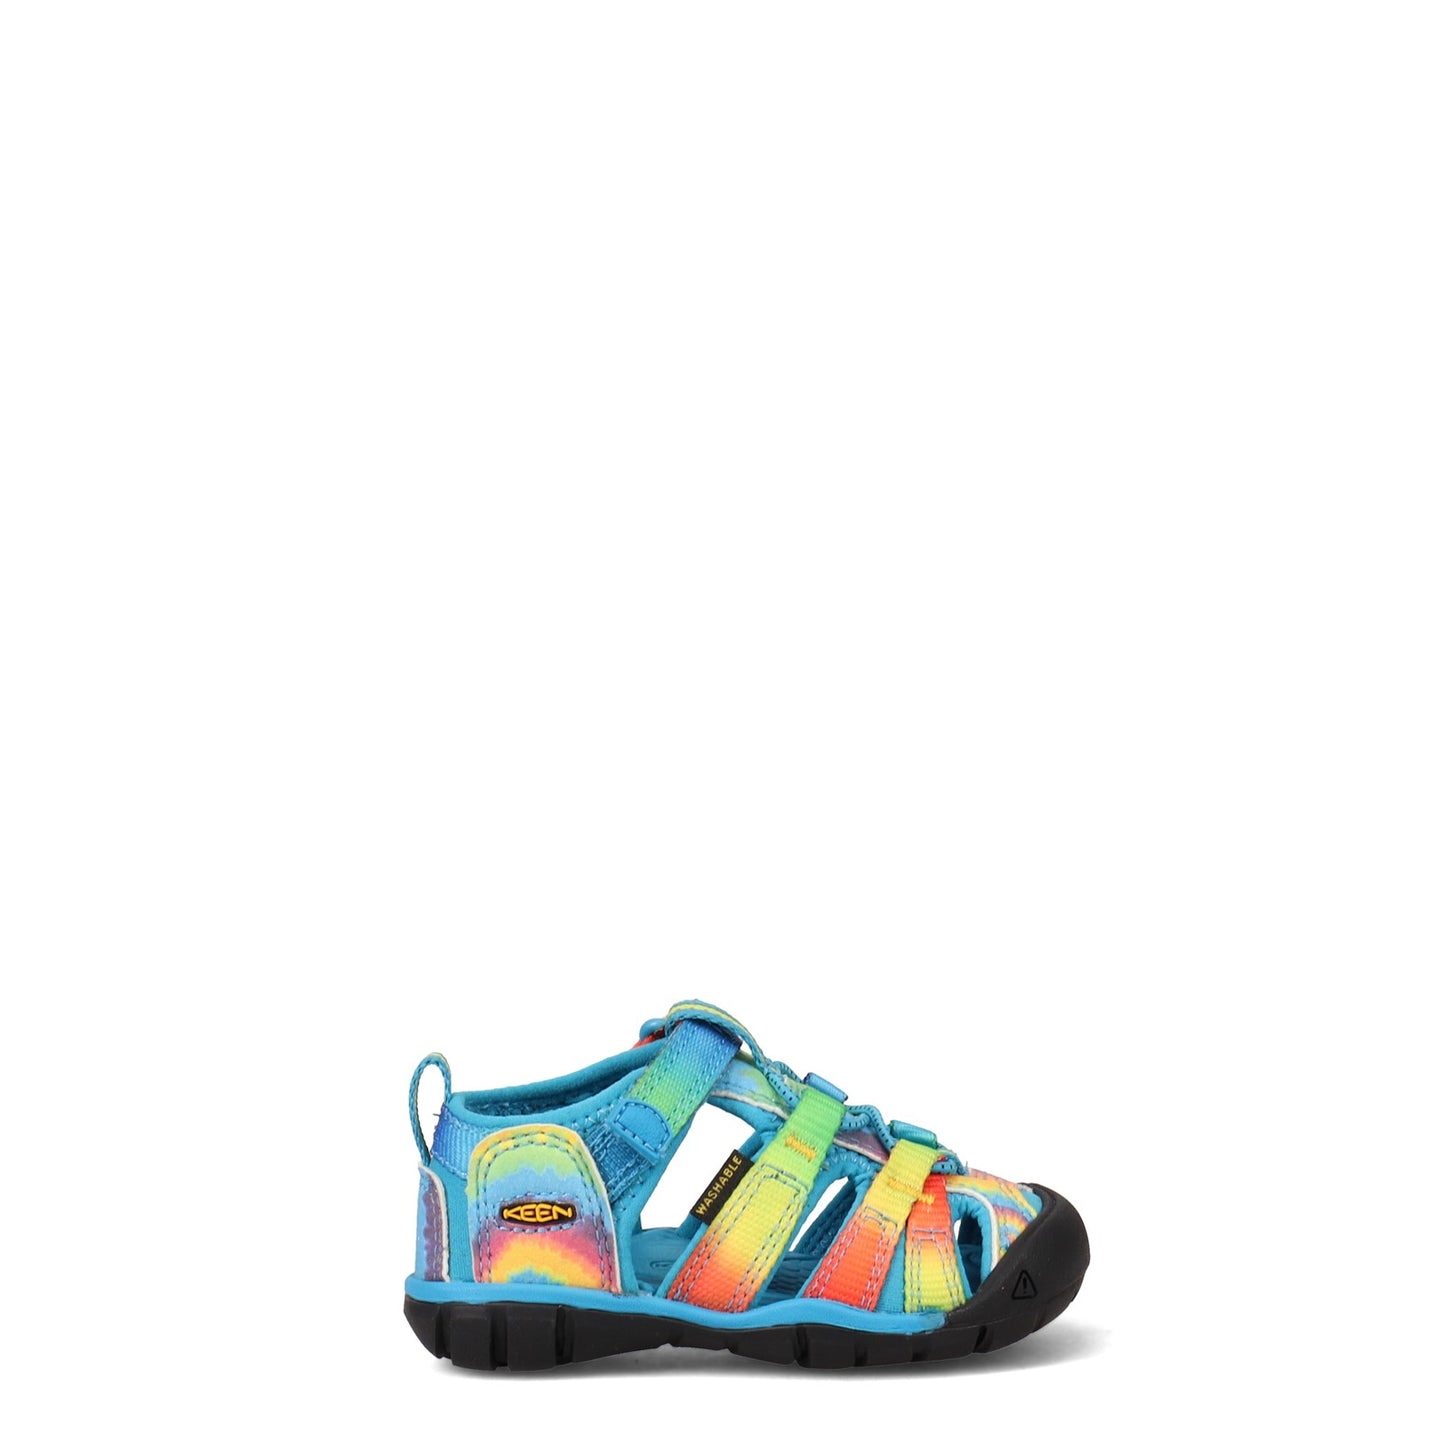 Peltz Shoes  Girl's Keen Seacamp II CNX Sandal - Toddler Vivid Blue/Original Tie Dye 1025224